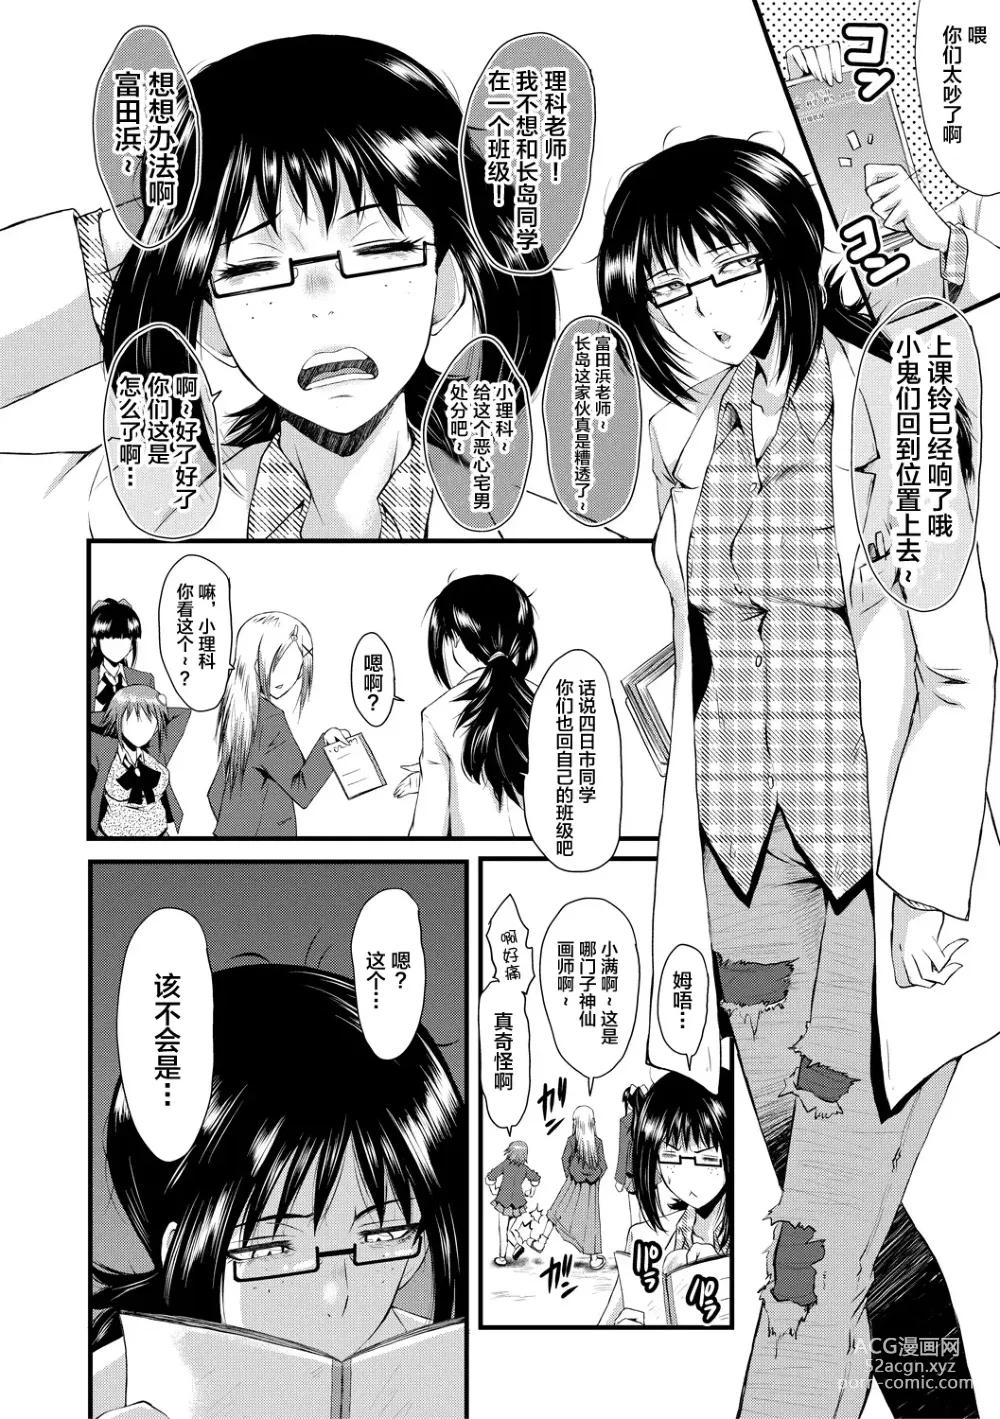 Page 16 of manga Sennou Kikan